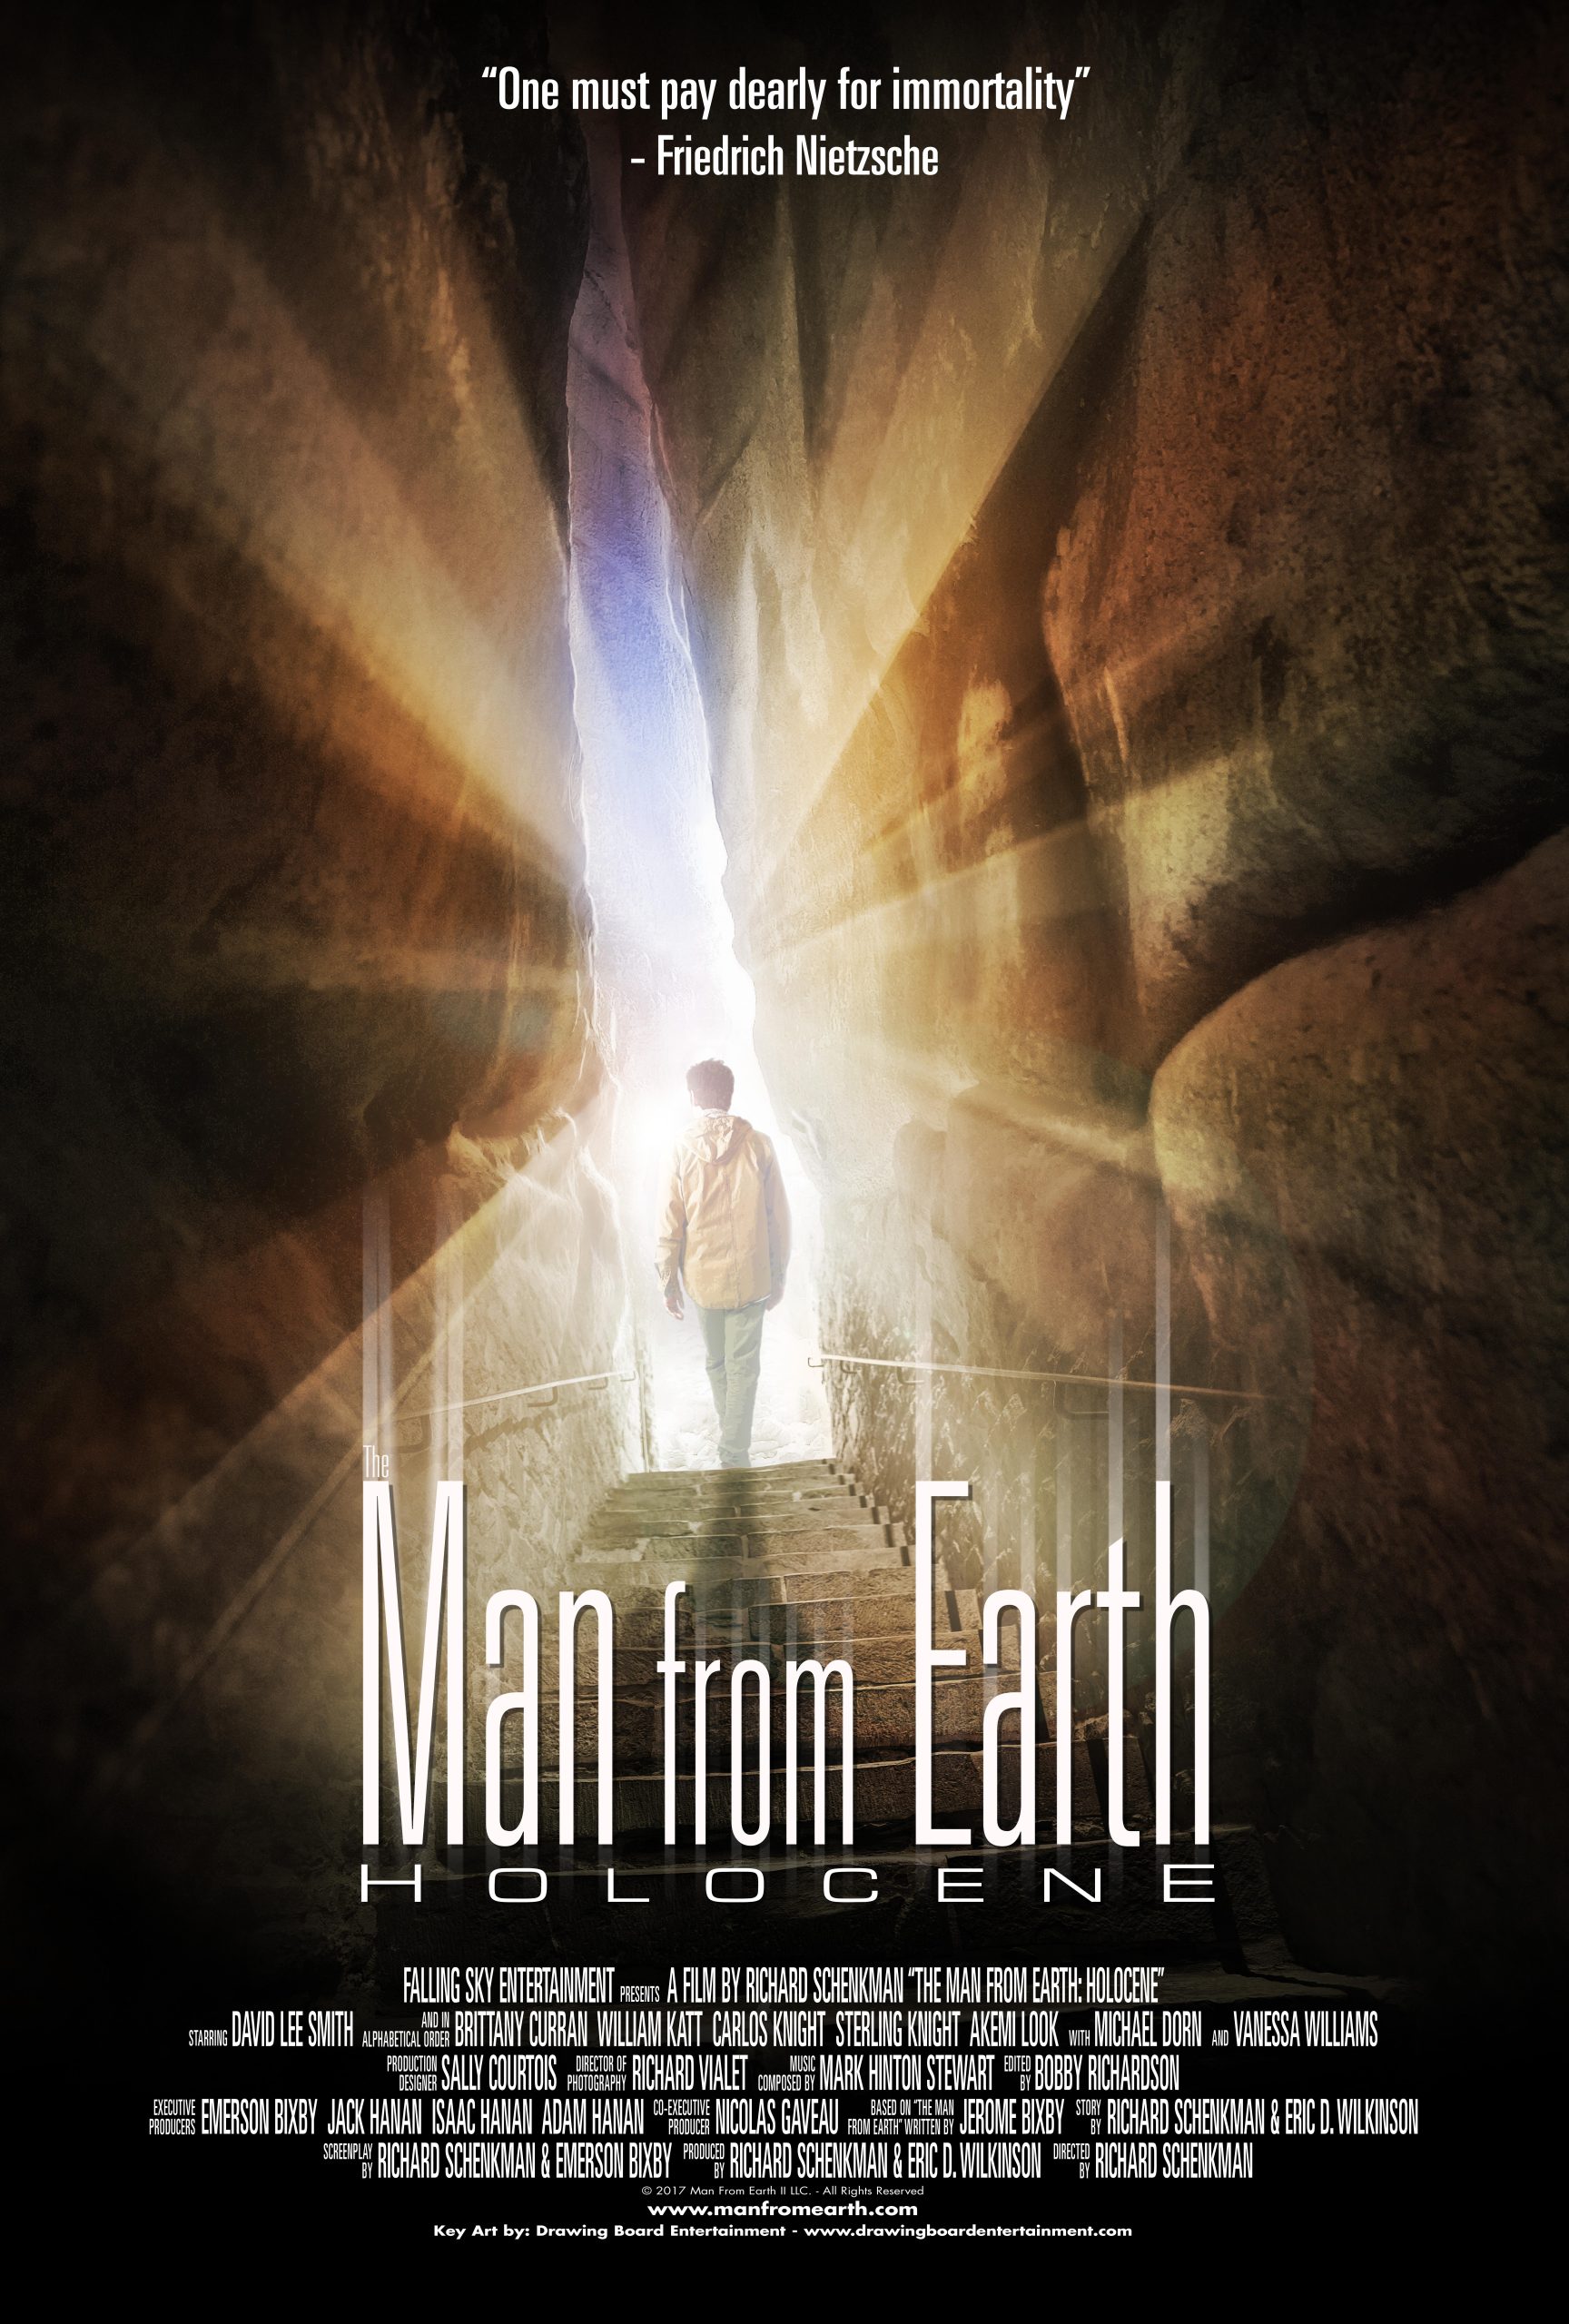 The Man from Earth: Holocene (2017) David Lee Smith